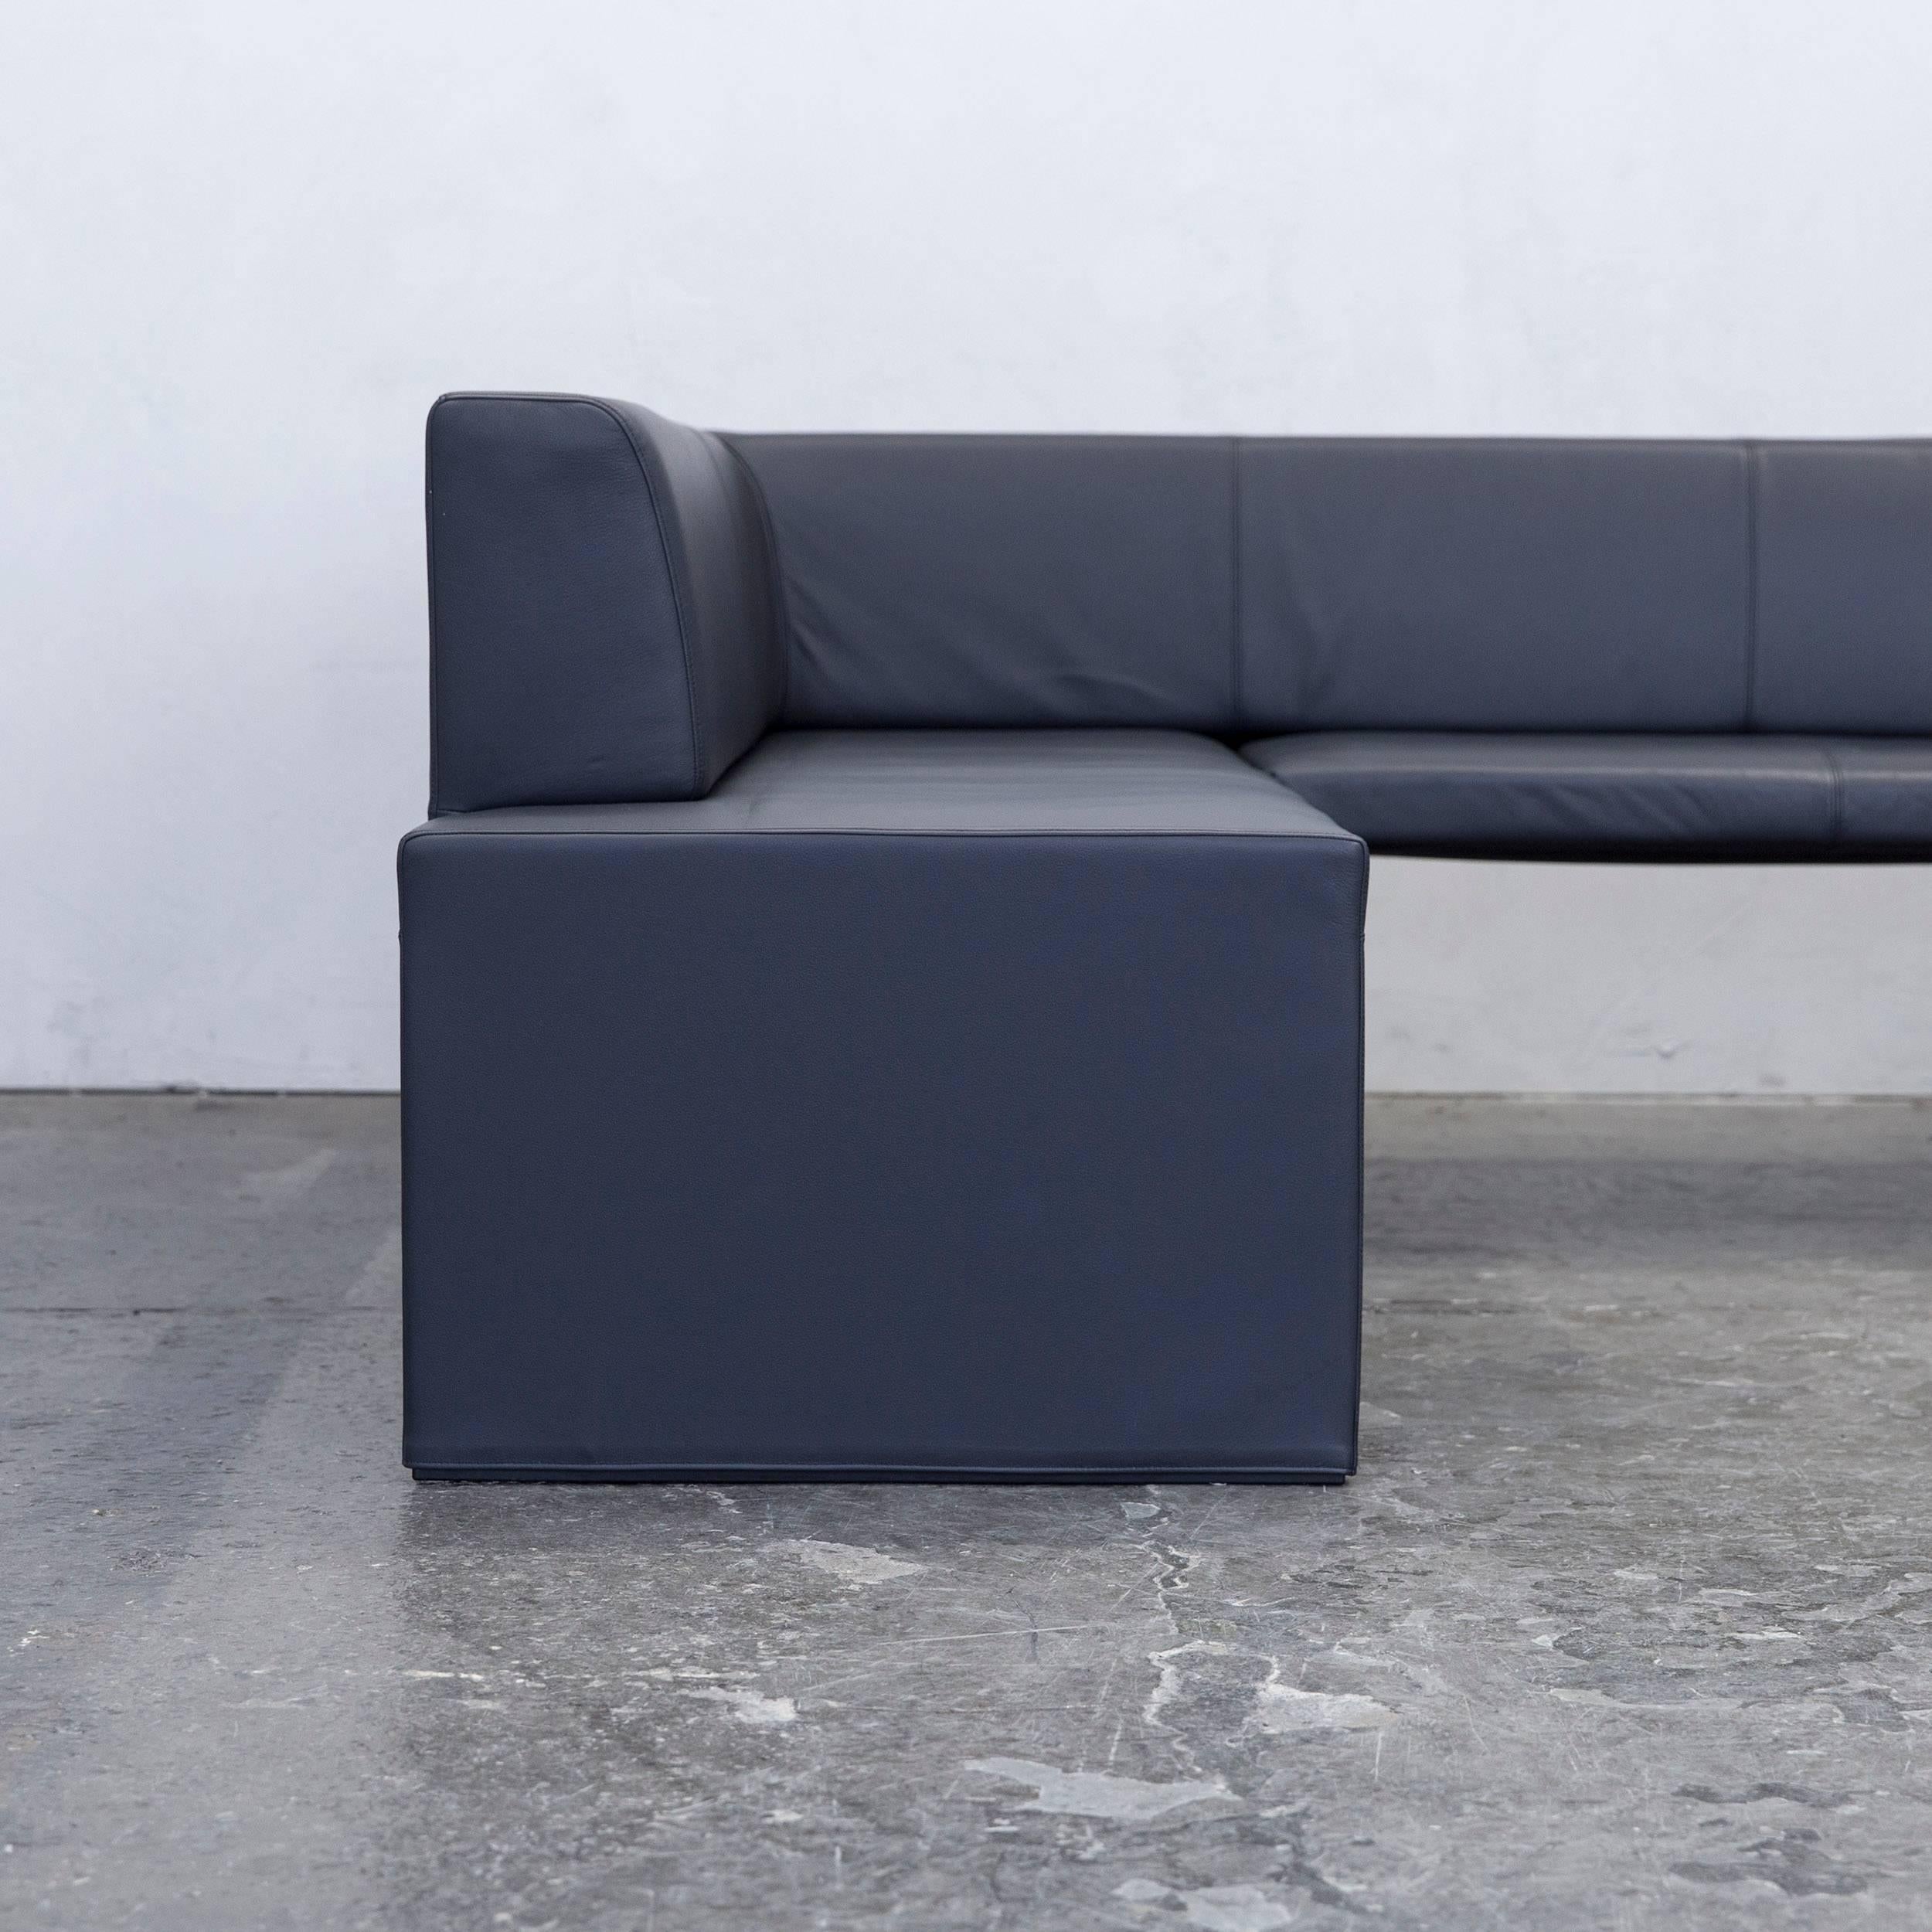 Anthrazit grey colored original Walter Knoll Together designer leather corner sofa in a minimalistic and modern design.